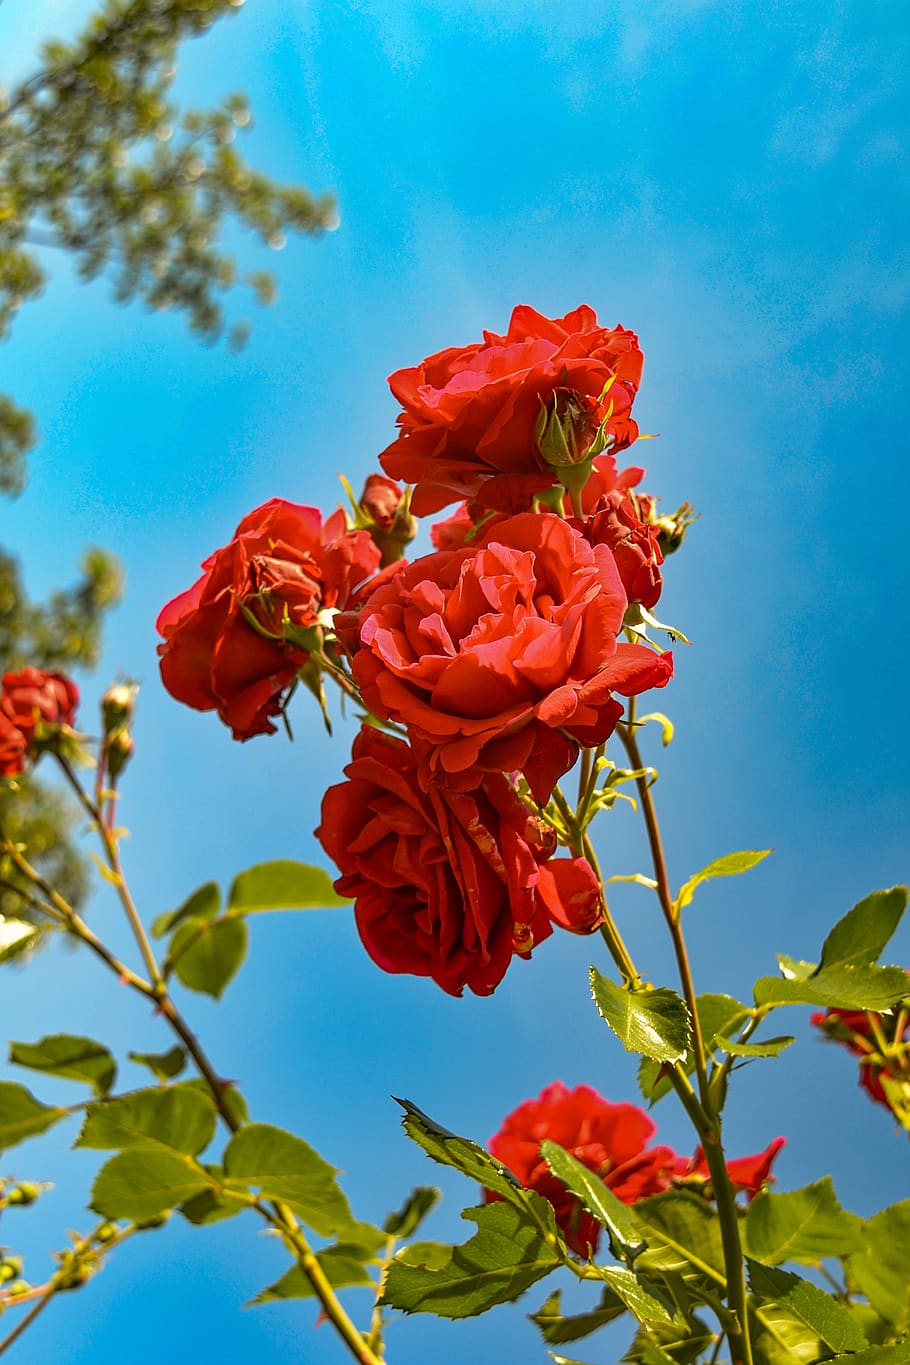 roses, red, garden, beauty, romantic, nature, flower, plant, phone wallpaper, flowering plant